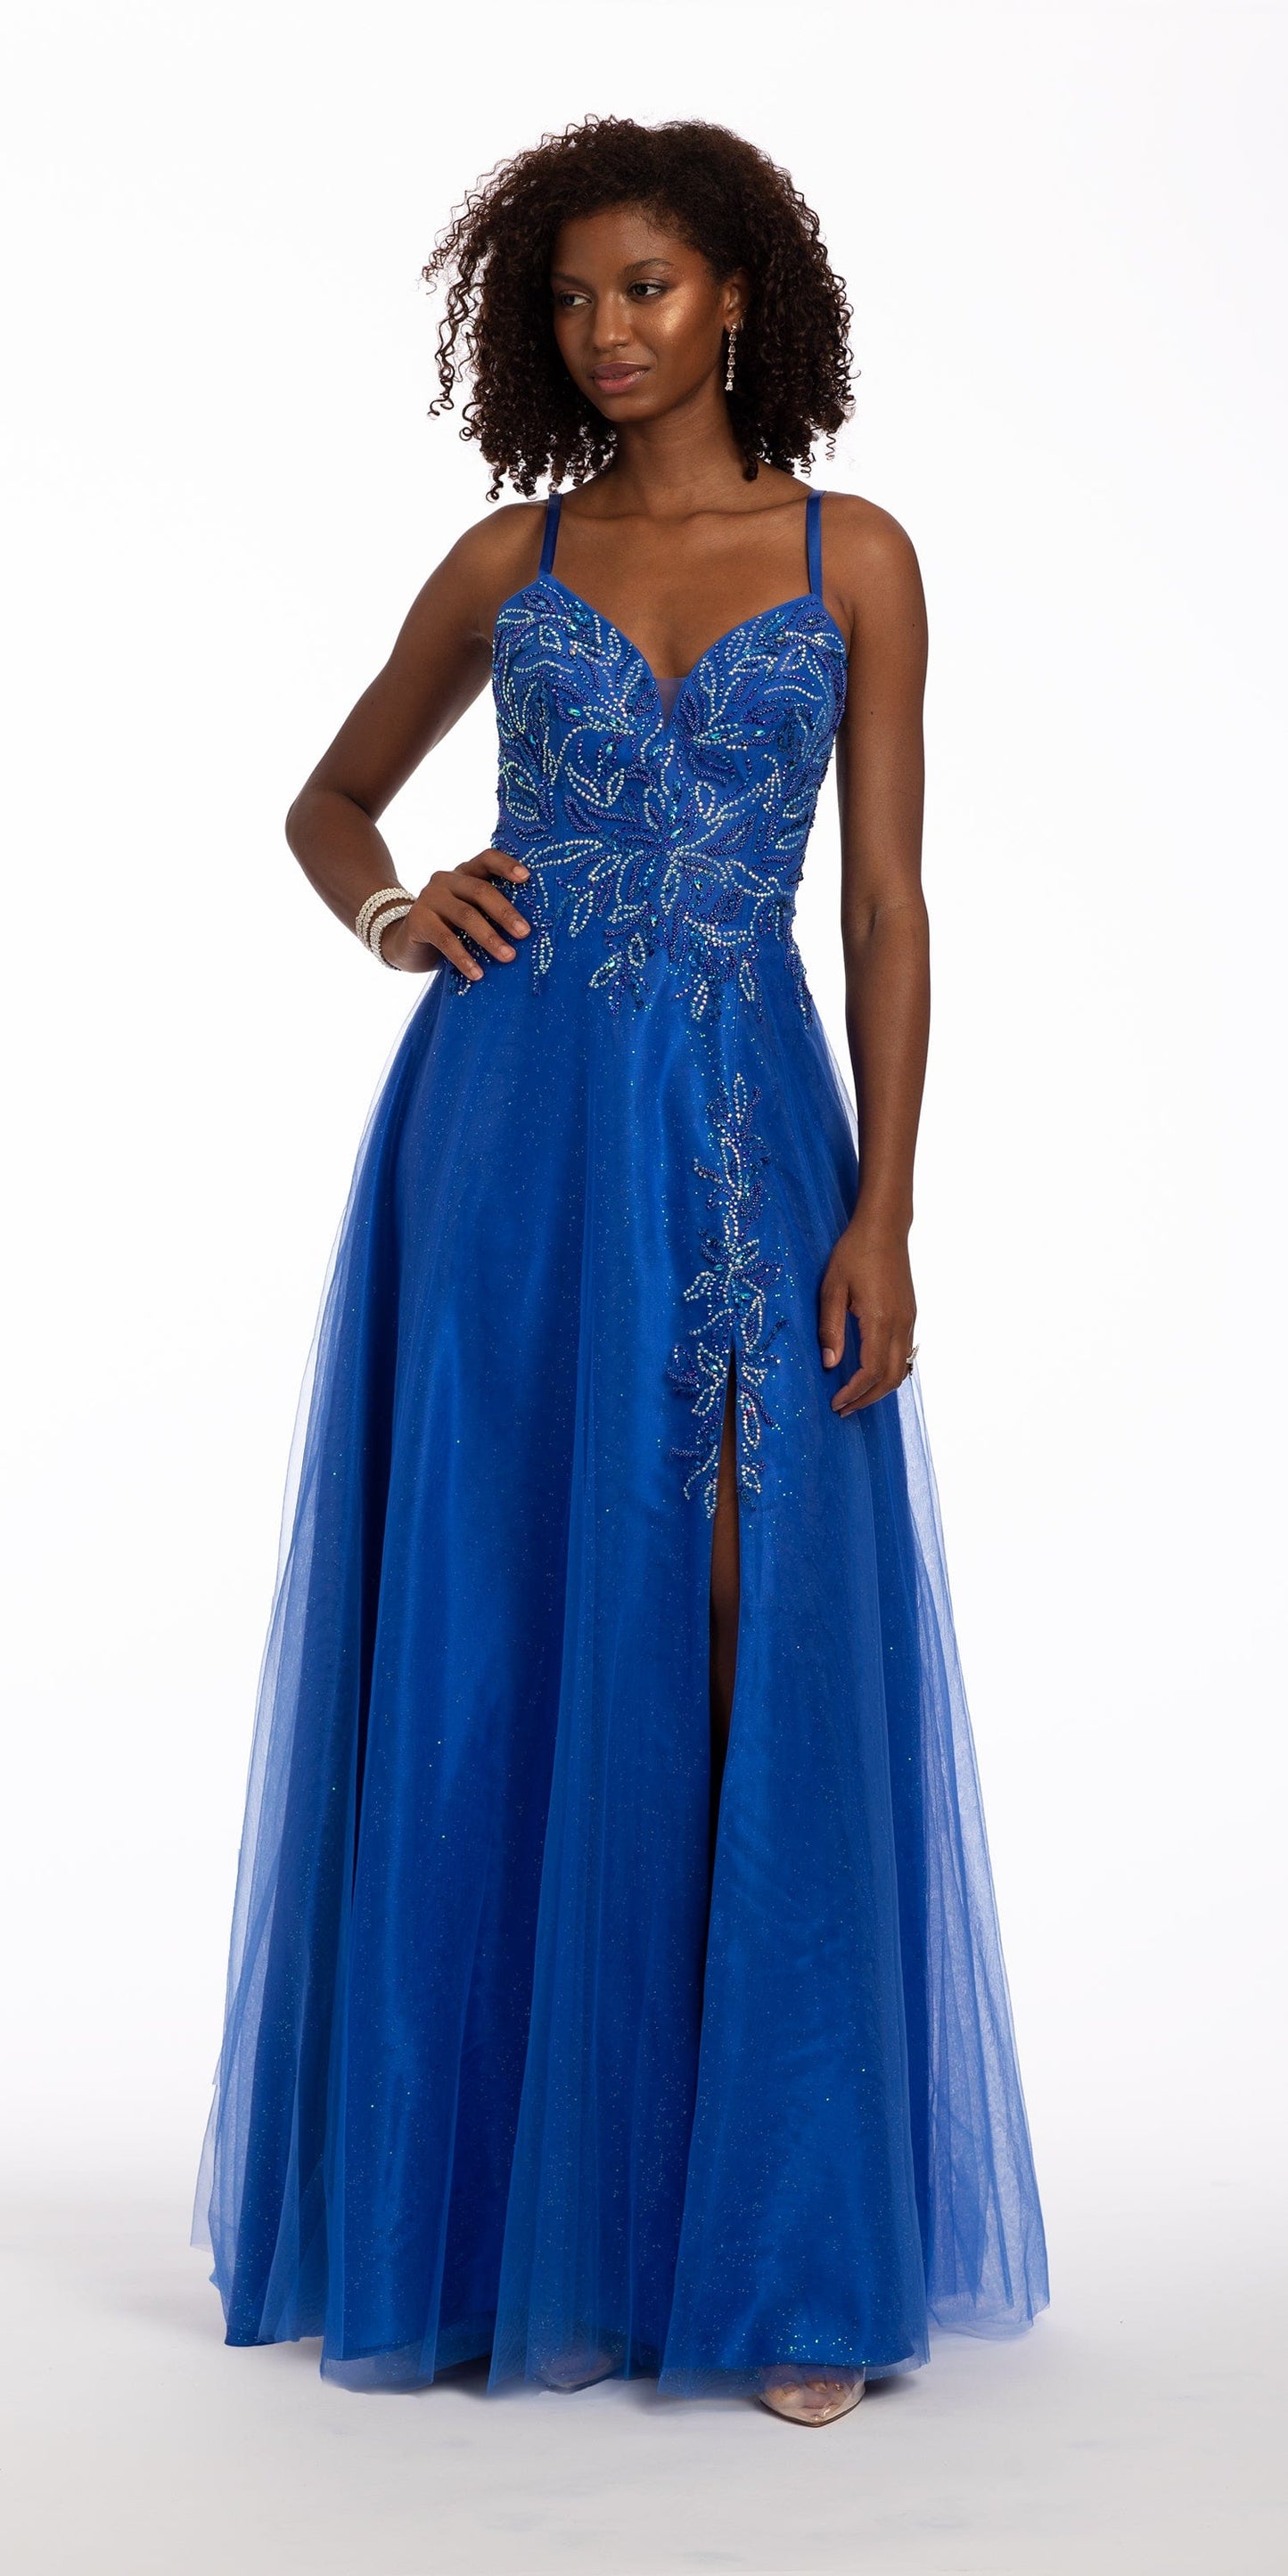 Camille La Vie Iridescent Heatset Beaded Sweetheart A Line Dress missy / 0 / royal-blue